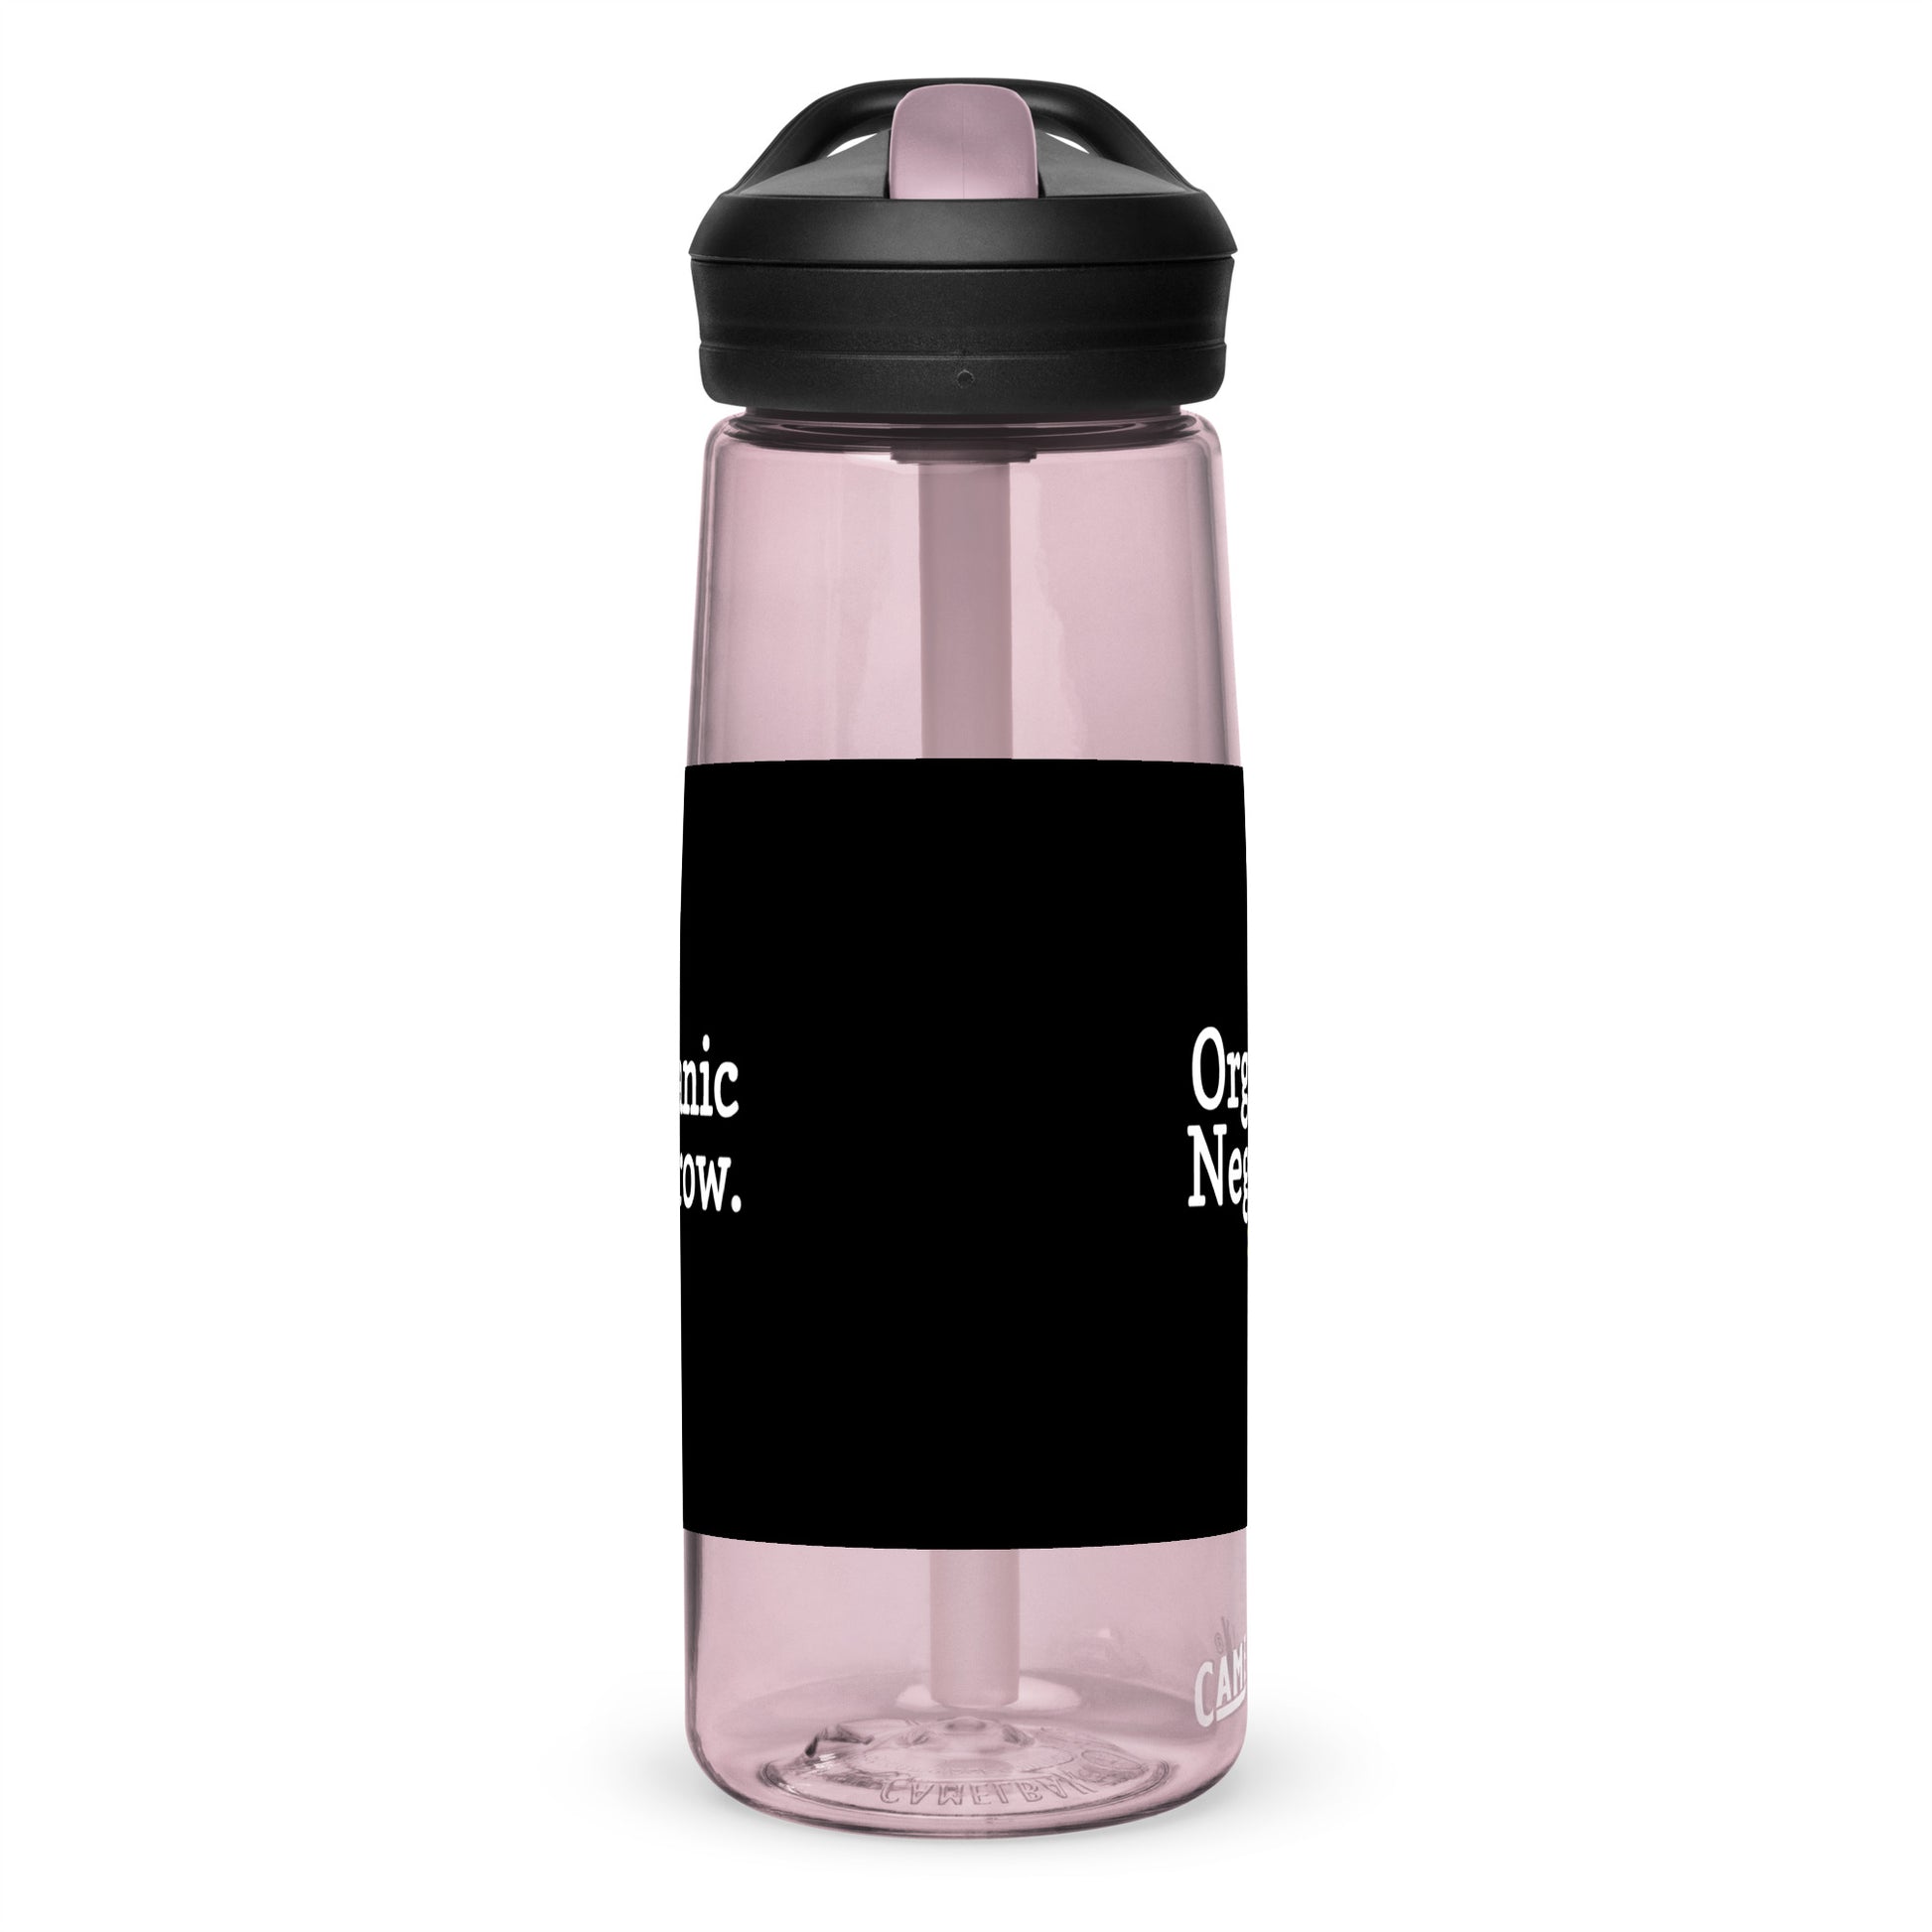 Organic Negrow Sports water bottle / Kyrie Irving /Sports water bottle